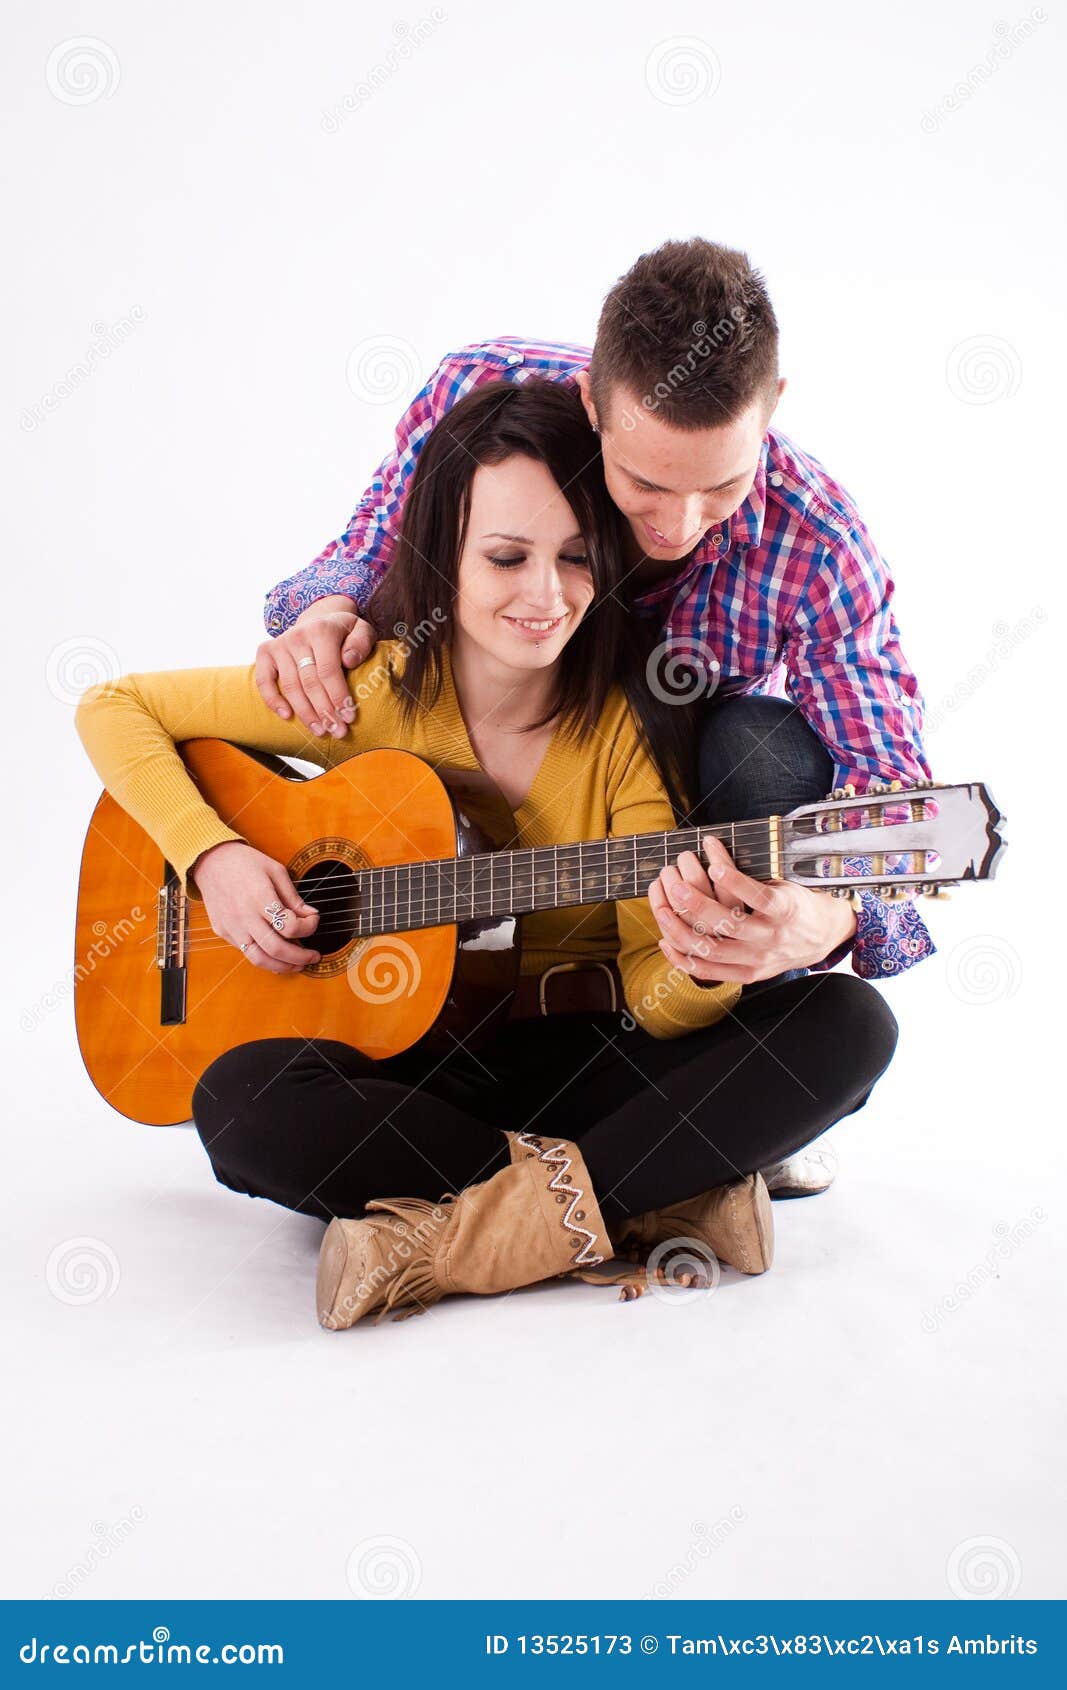 Romantic guitar  couple  stock image Image of young studio 